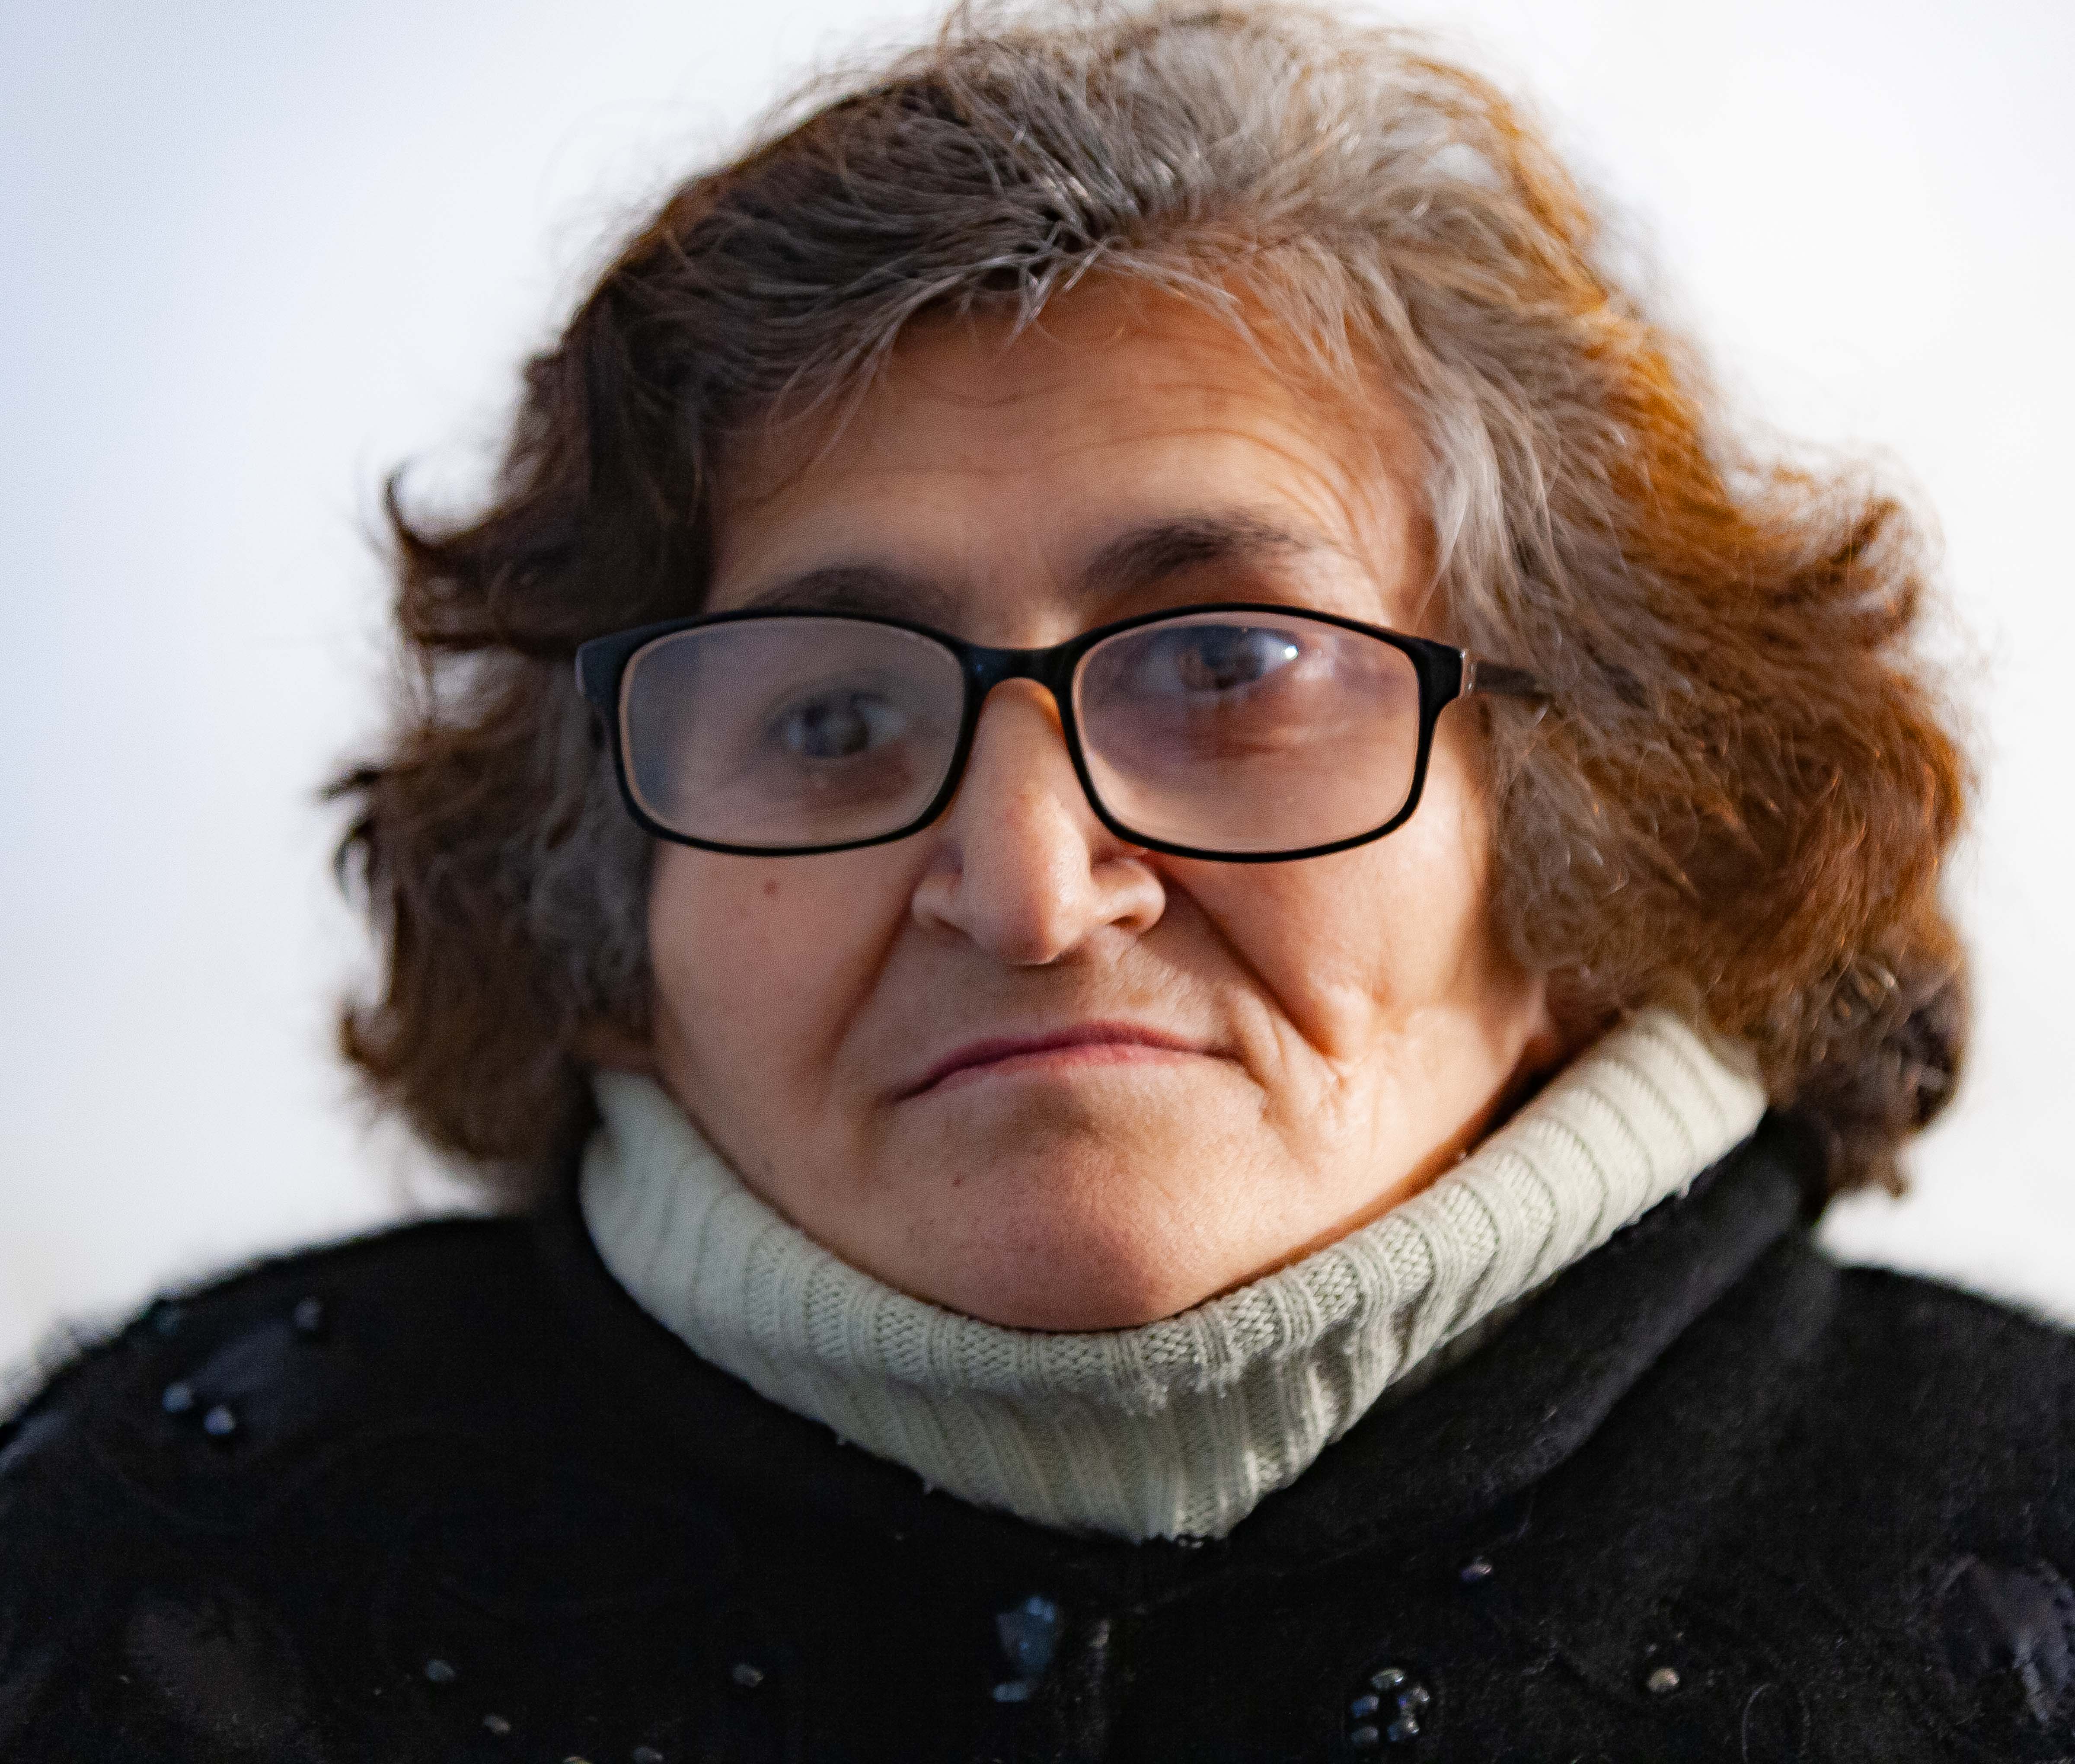 Azerbaijan, Samux Prov, Portrait Of Old Woman, 2009, IMG 8640